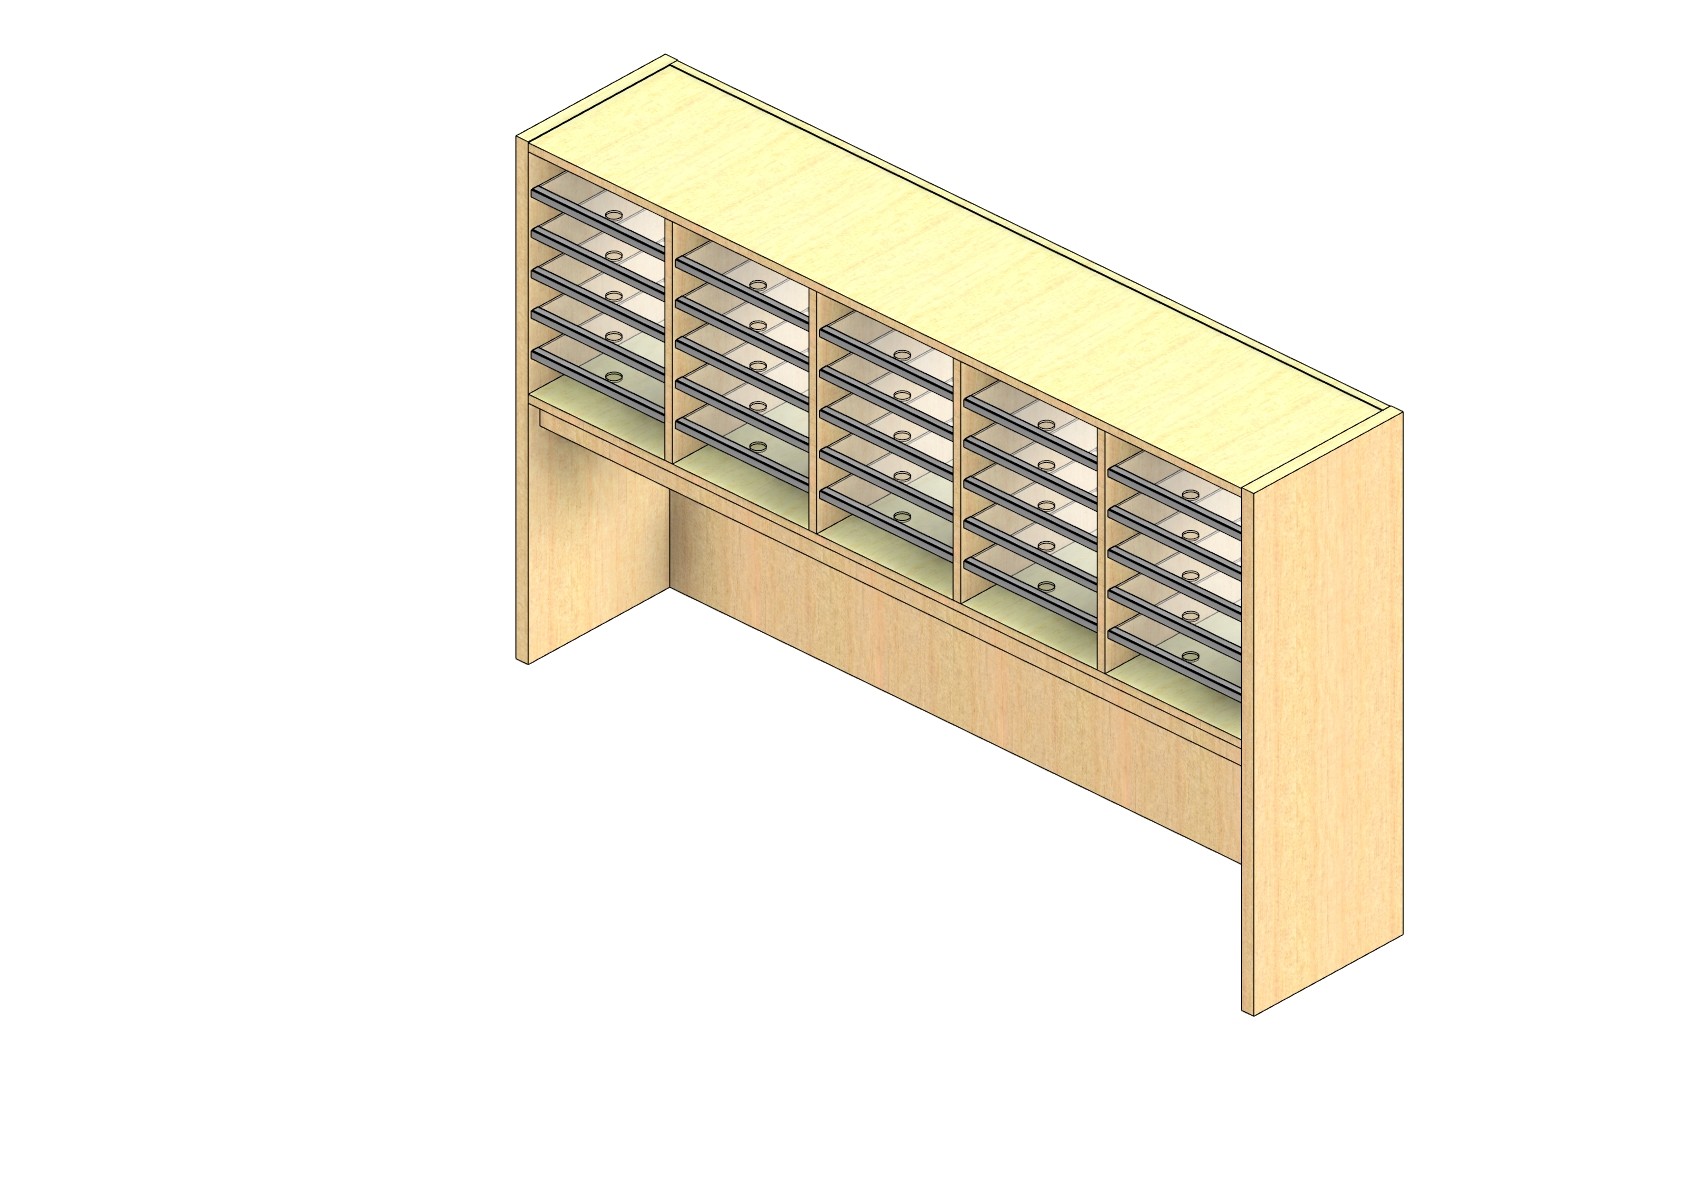 Standard Sized Open Back Sort Module - 5 Columns - 18" Sorting Height w/ 18" Riser